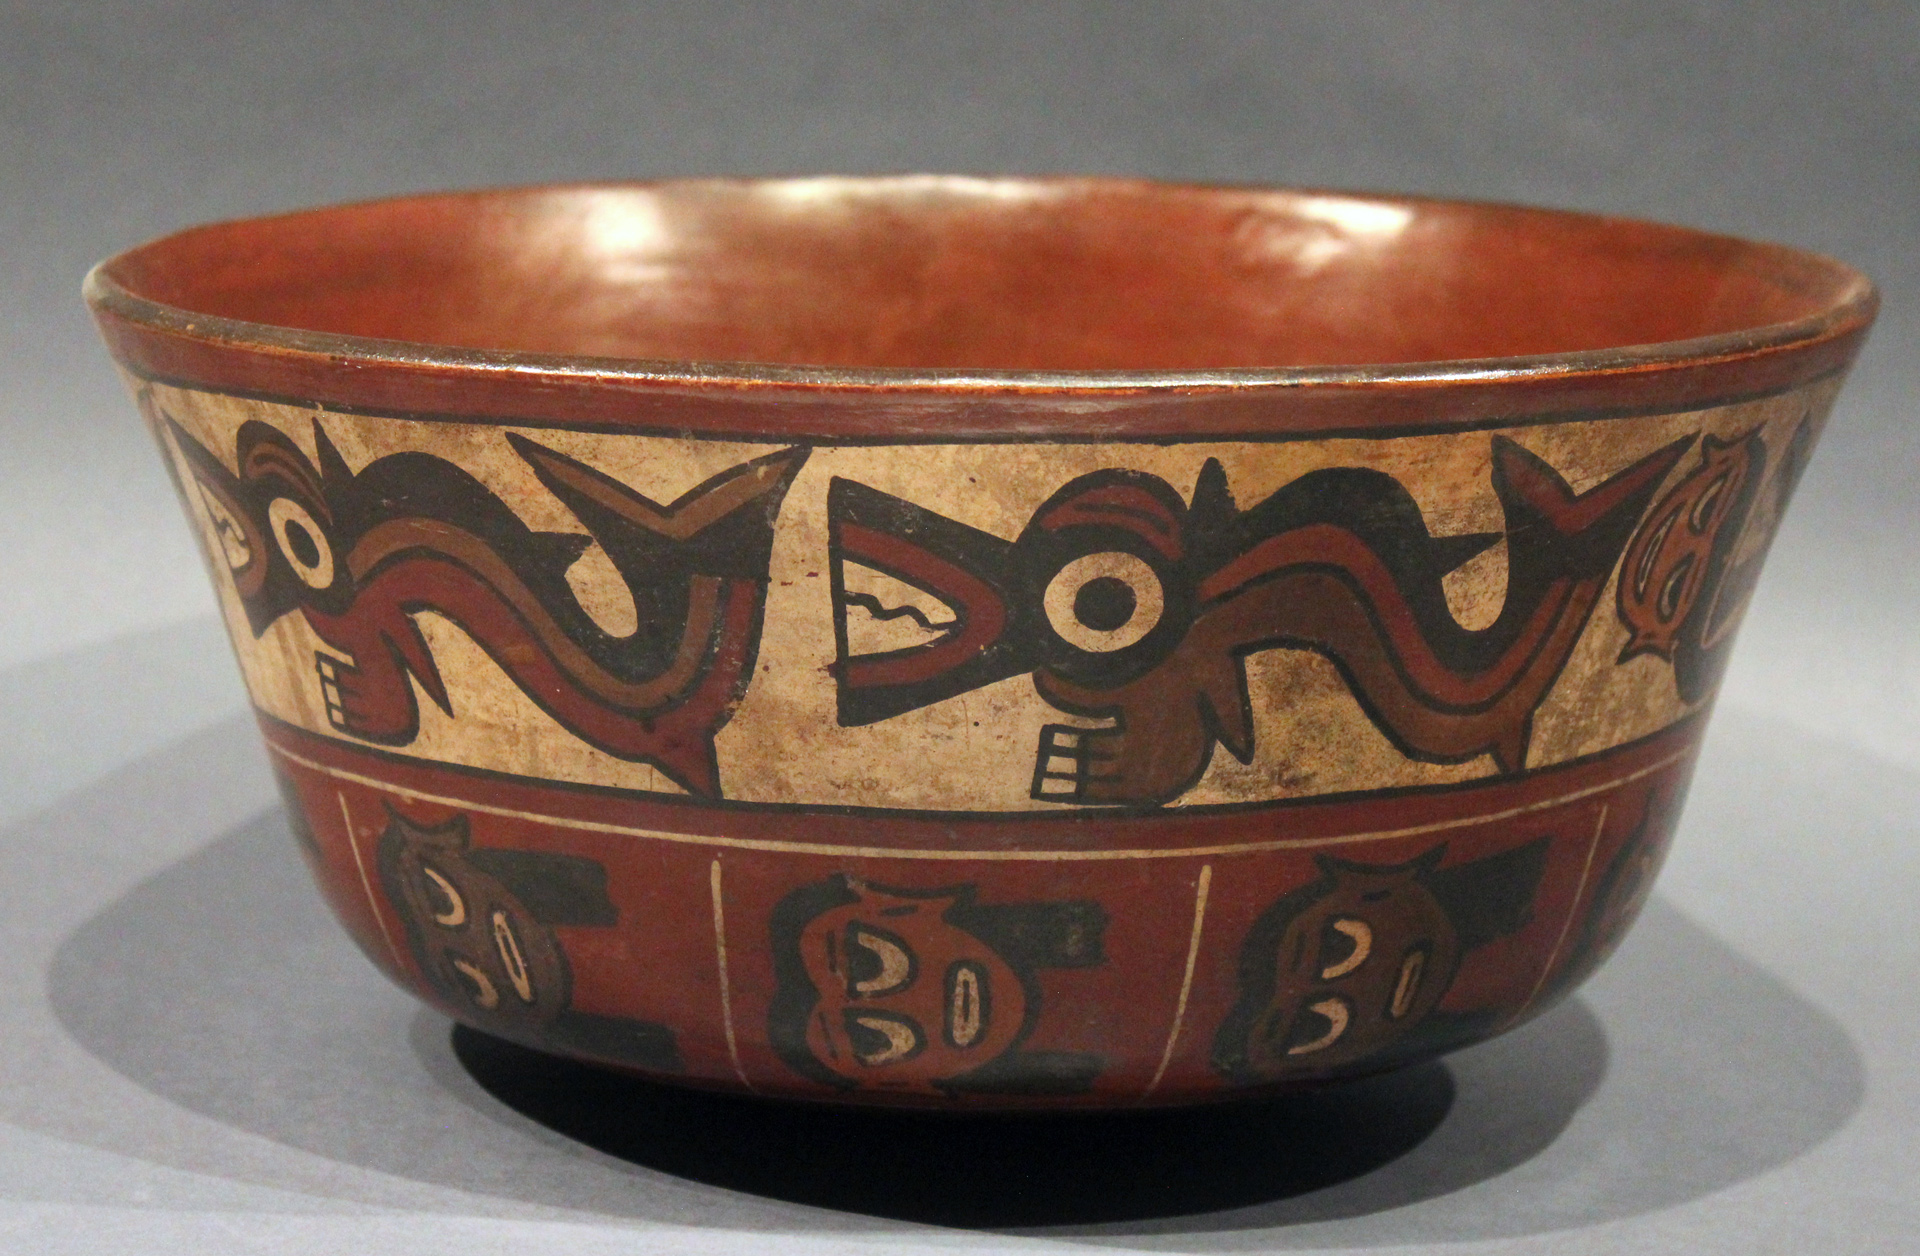 bowl with monochromatic art design